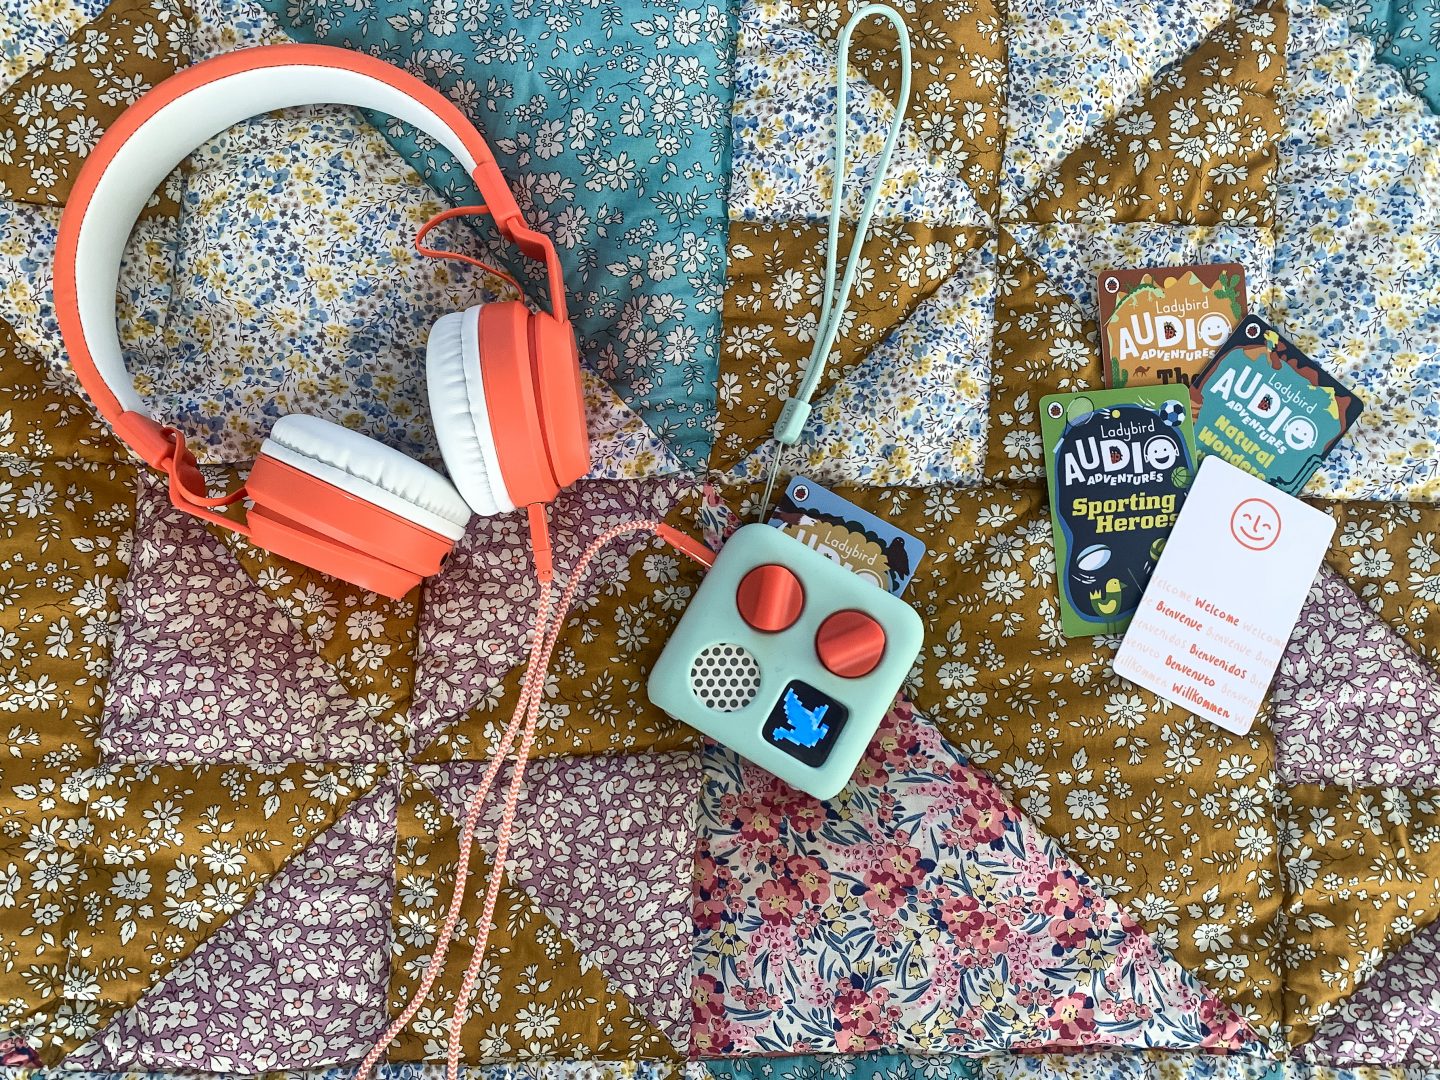 Yoto Mini Audio Player Kids' Smart Speaker Review 2022